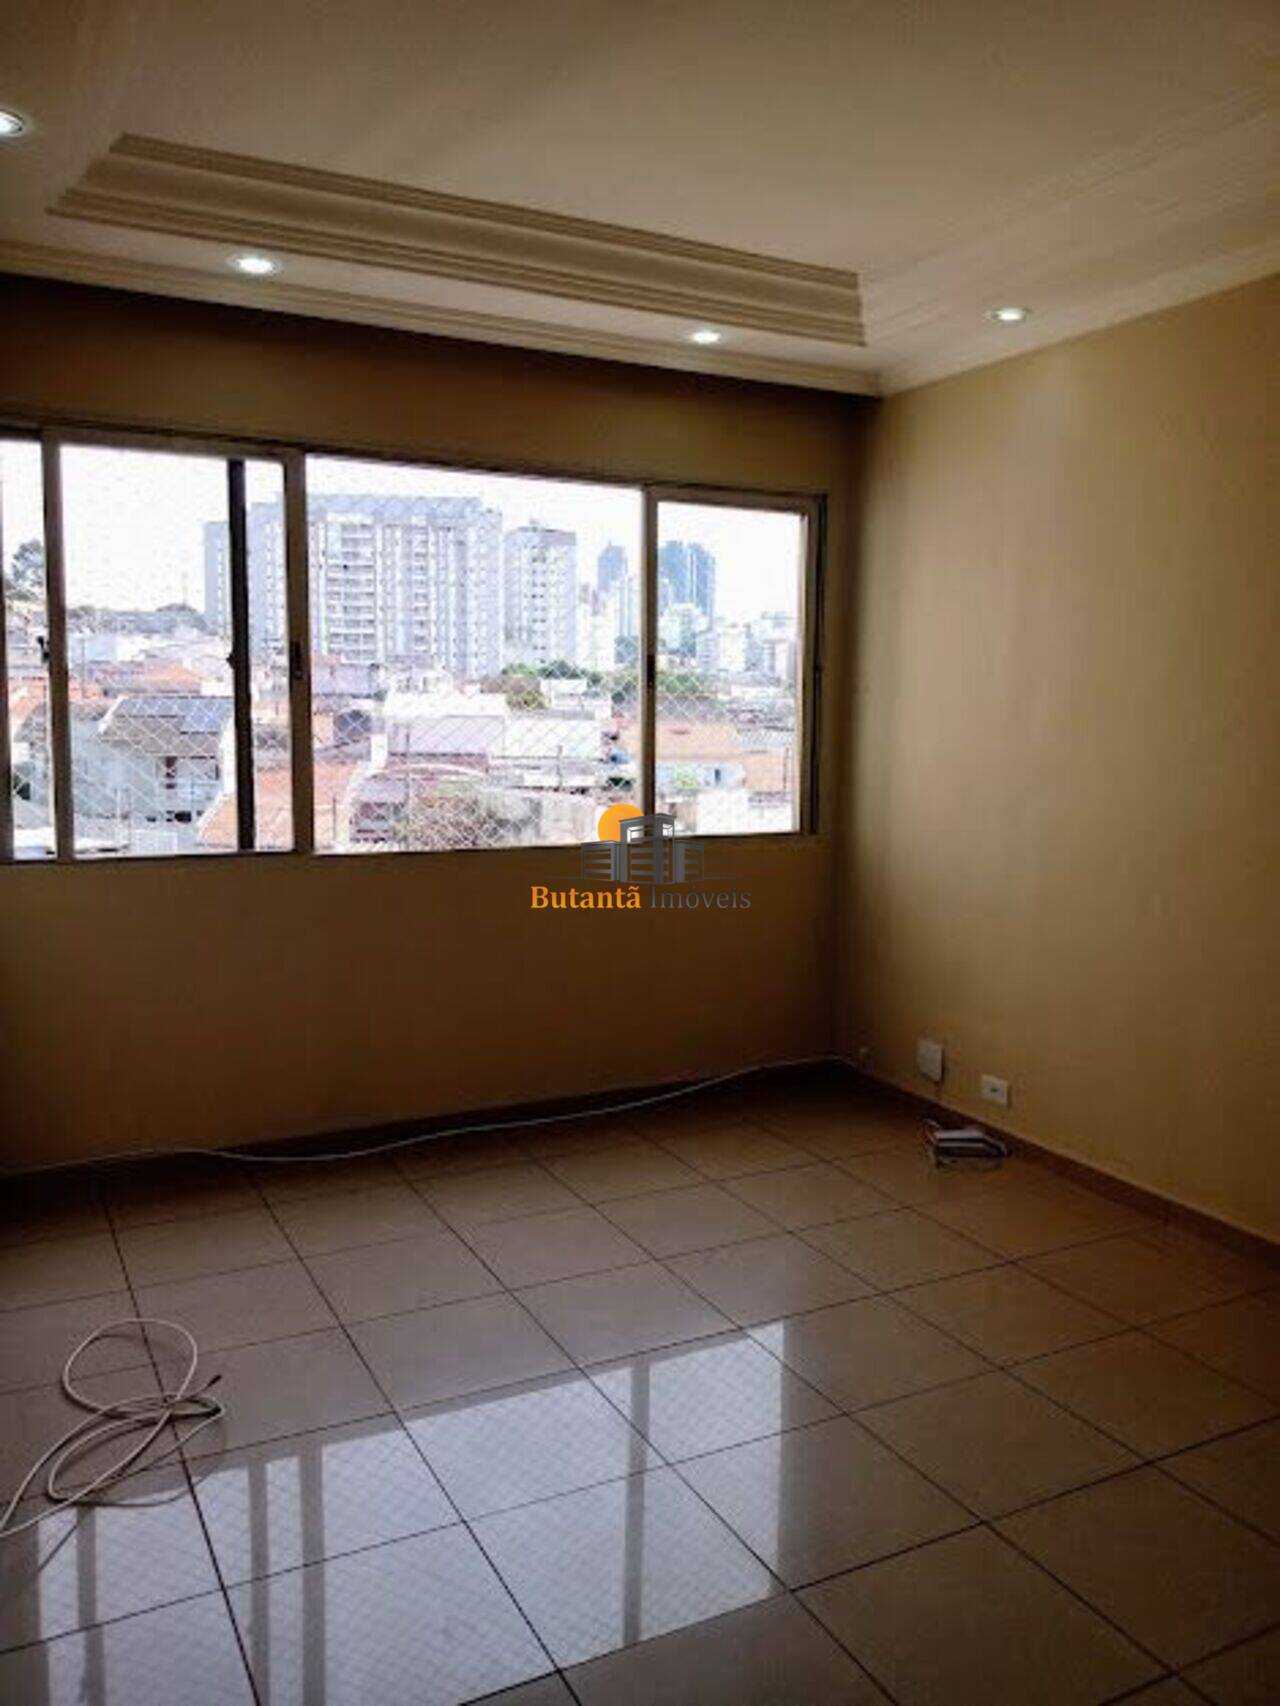 Apartamento Vila Lageado, São Paulo - SP